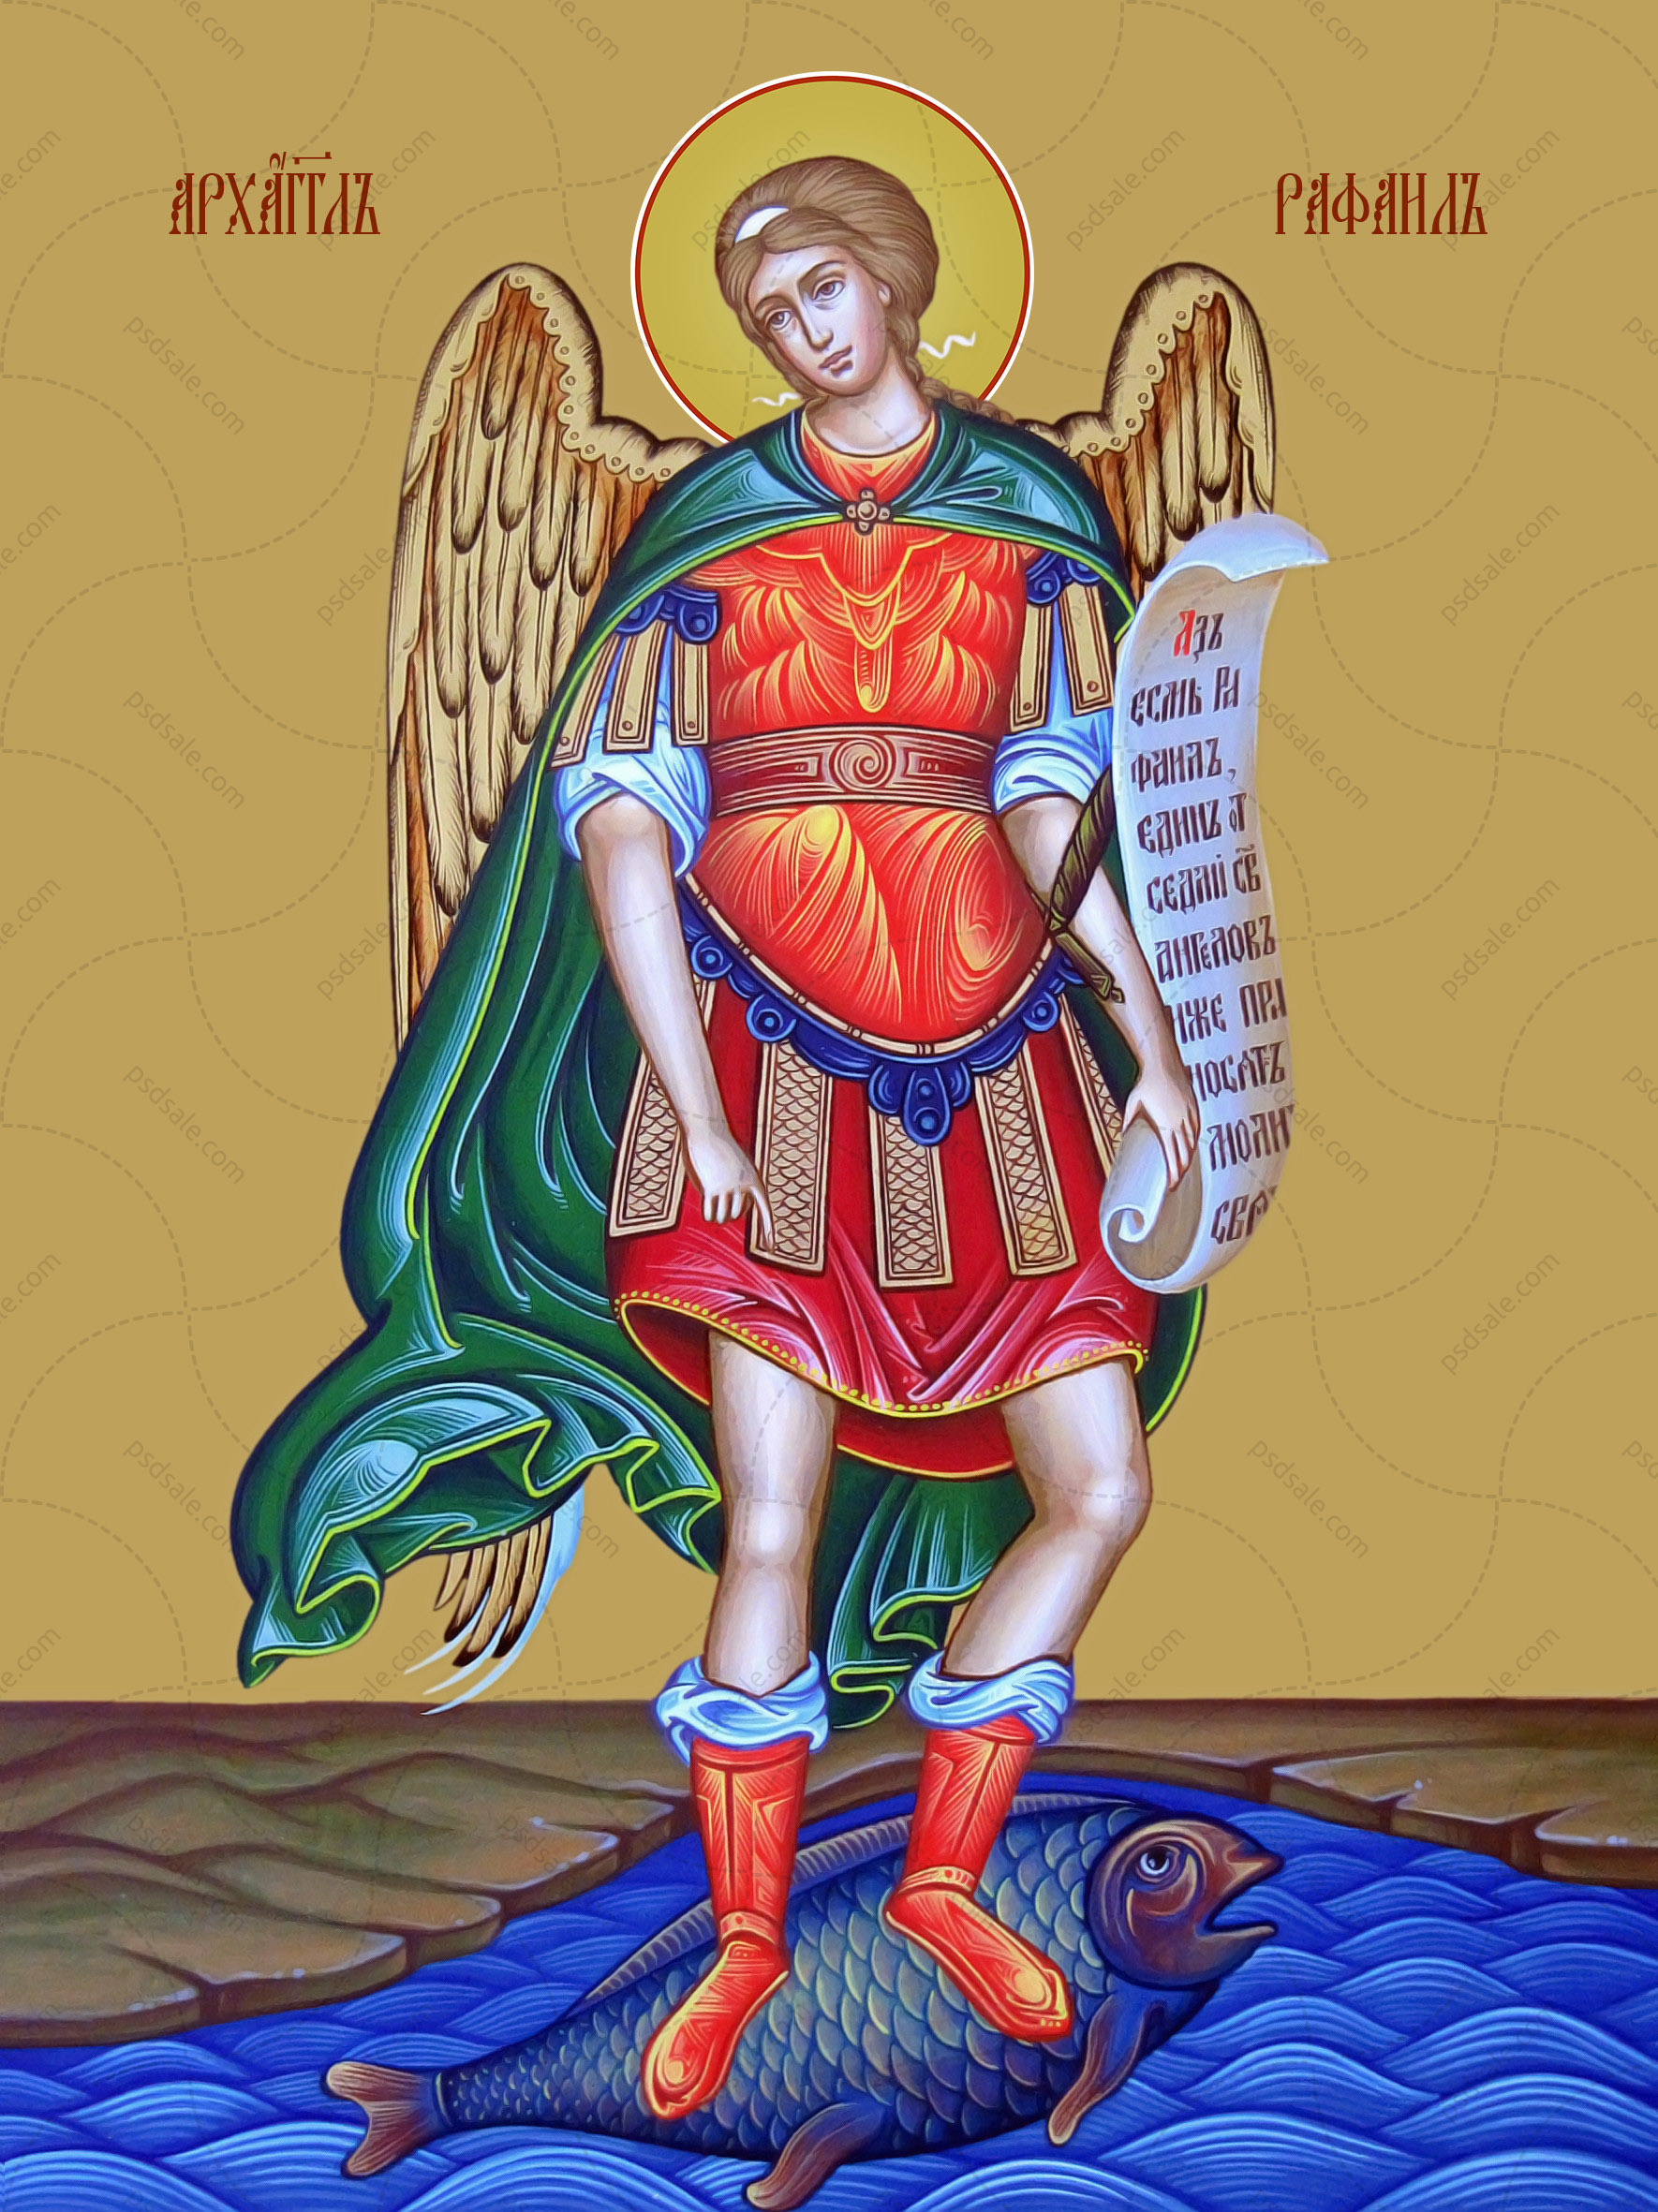 Raphael, archangel